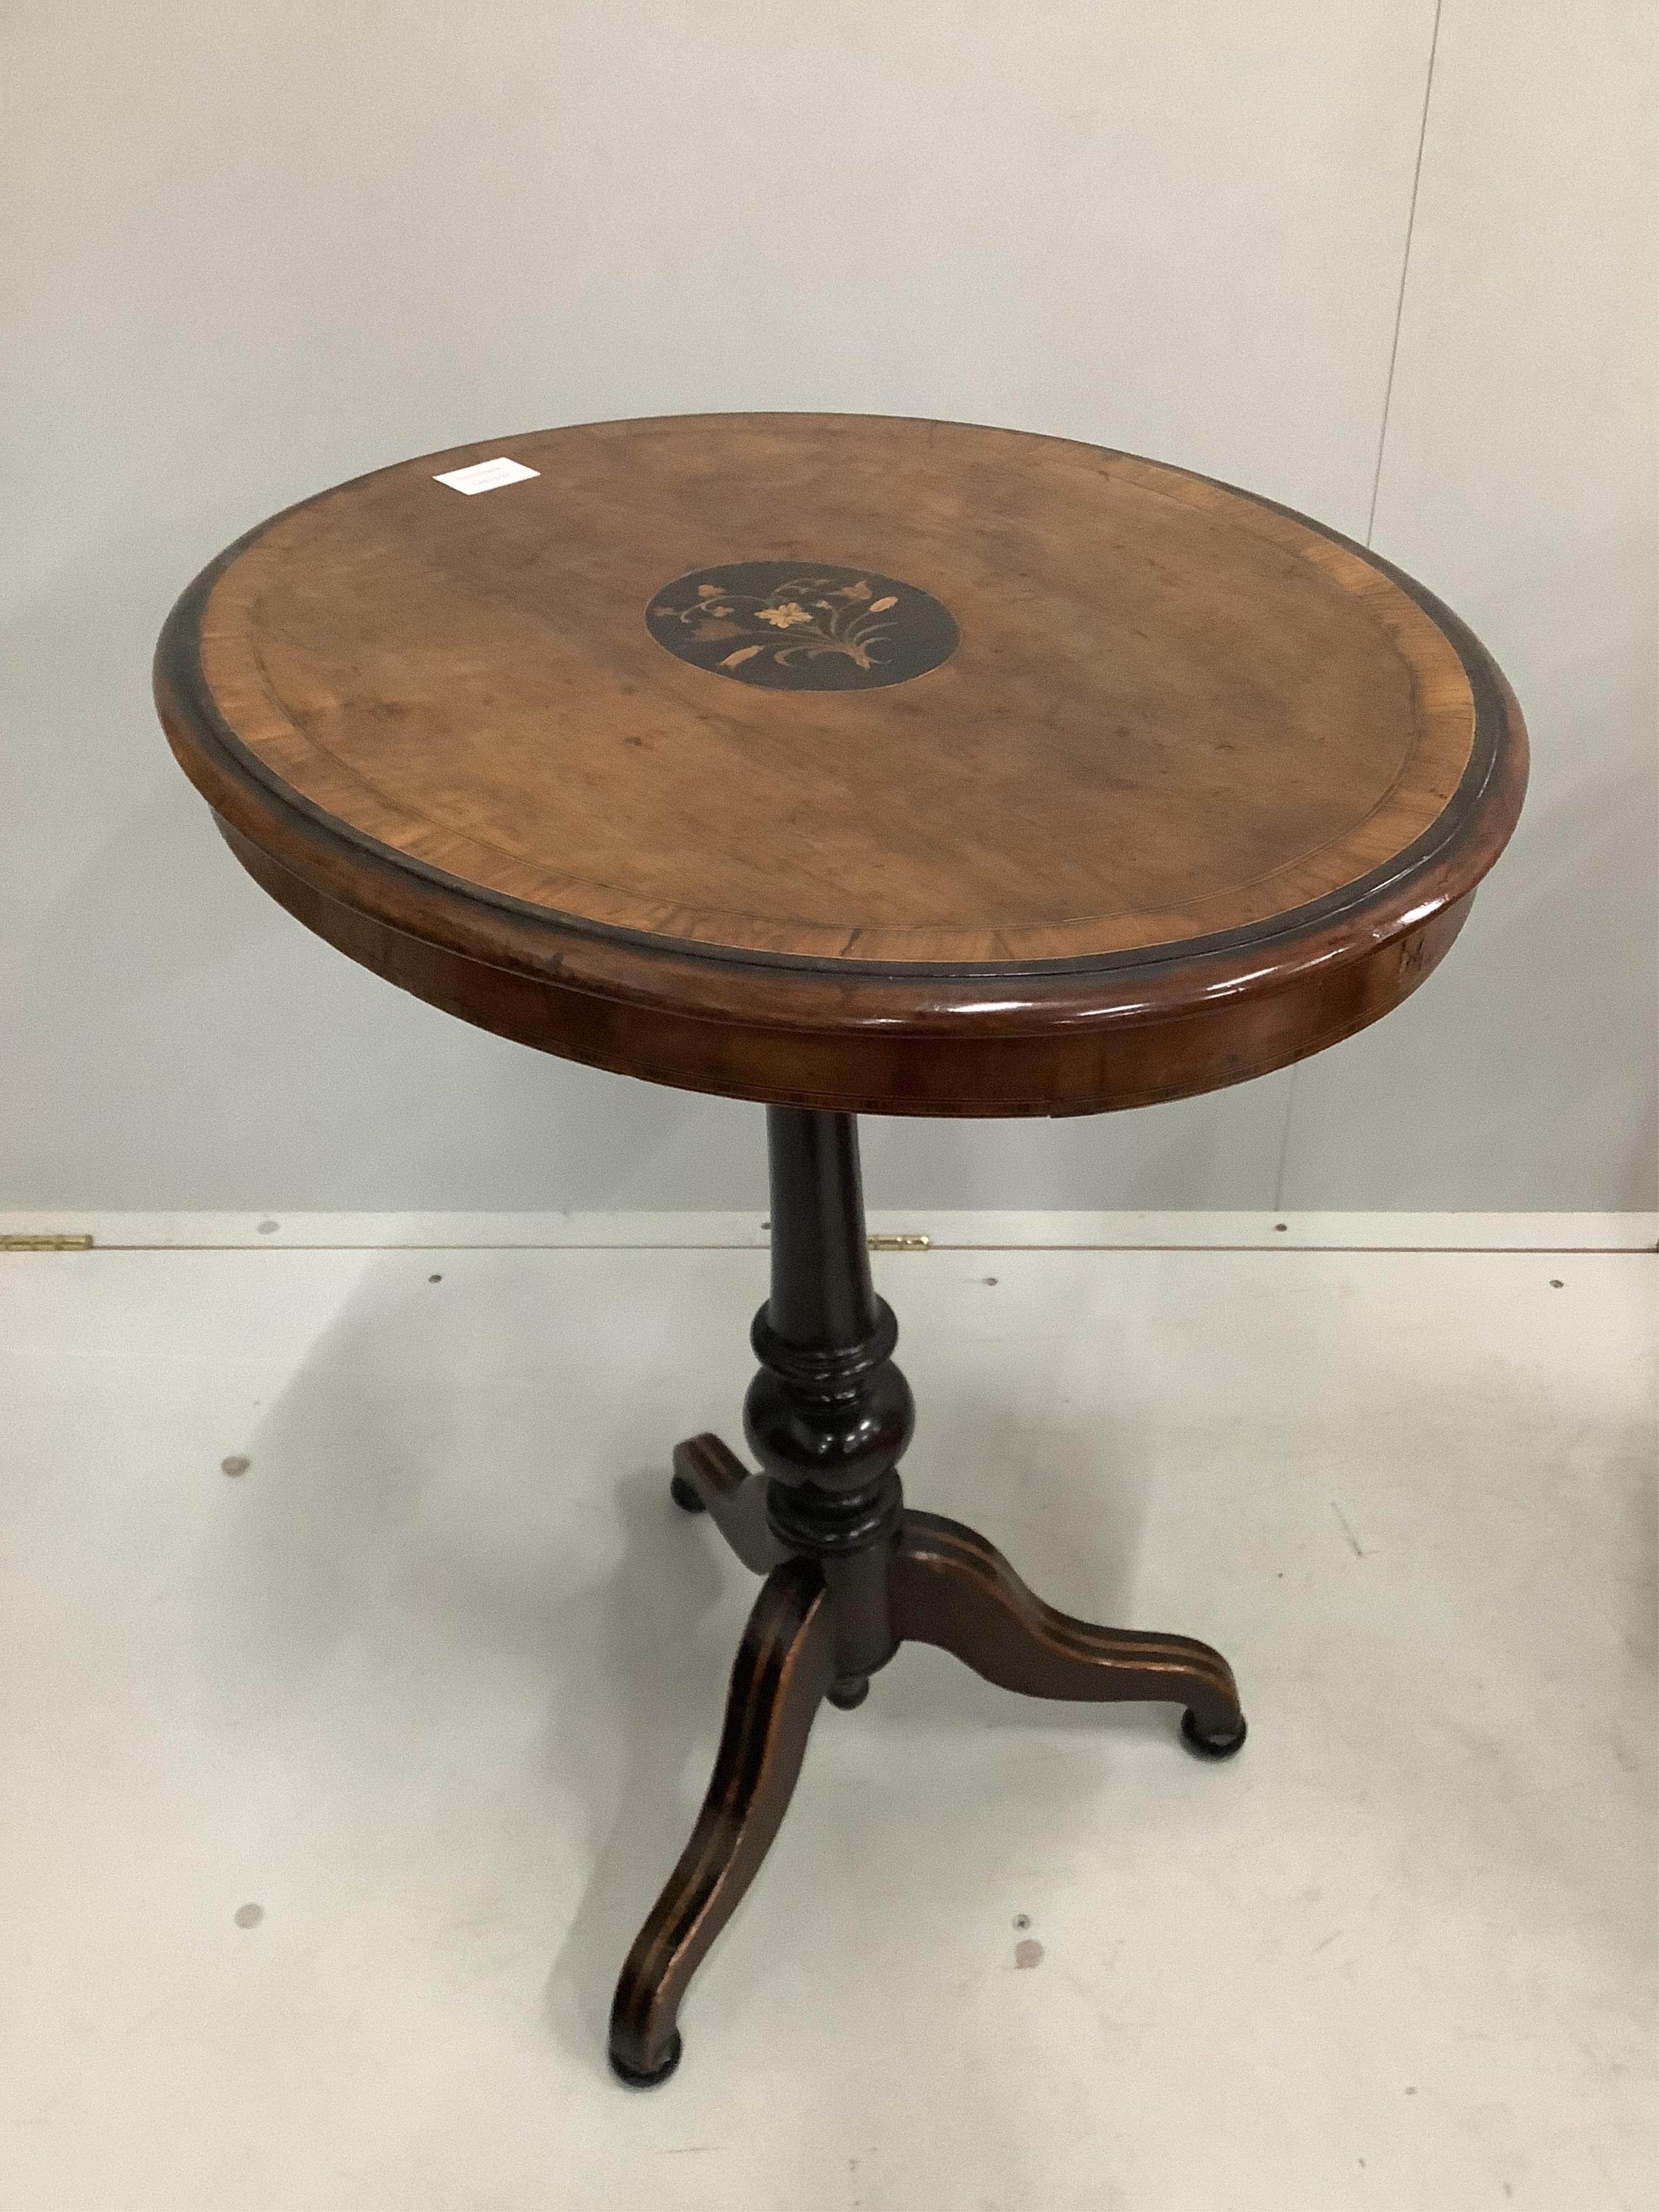 A Victorian inlaid oval walnut tripod table, width 60cm, depth 48cm, height 74cm. Condition - fair